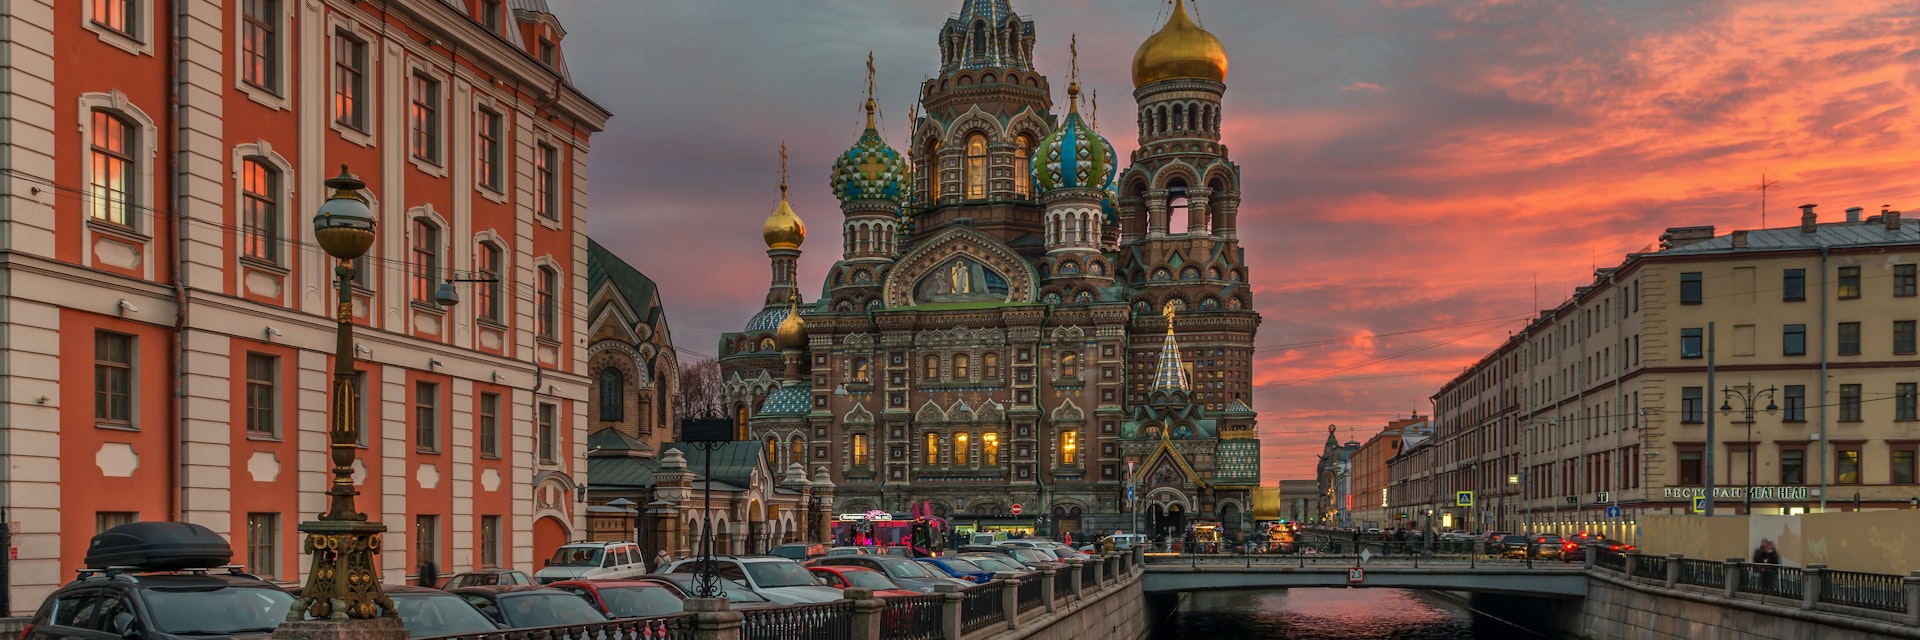 St.Petersburg, Russia.